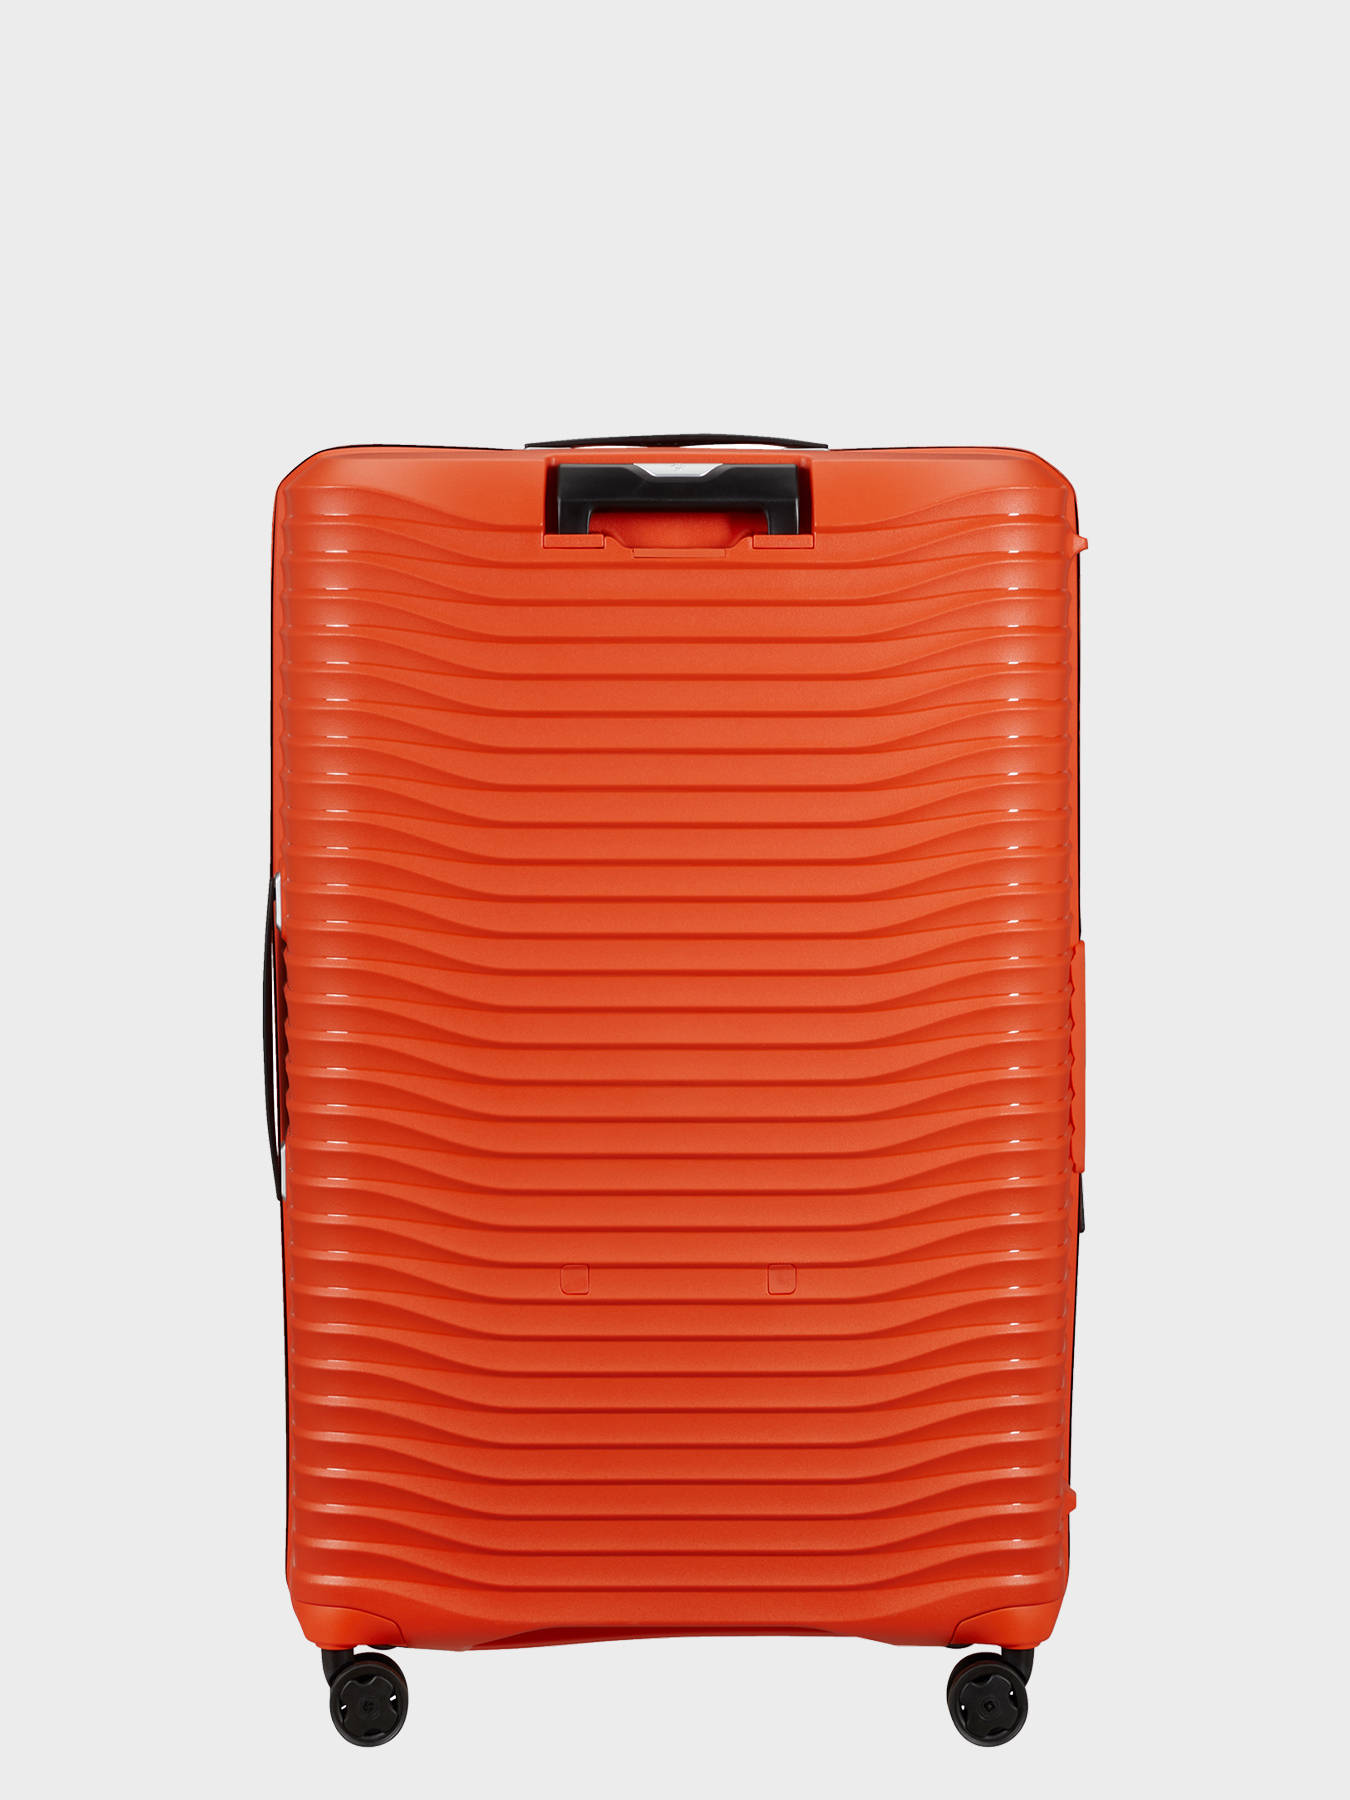 Samsonite Hardside luggage 143110 / KJ1003 - best prices